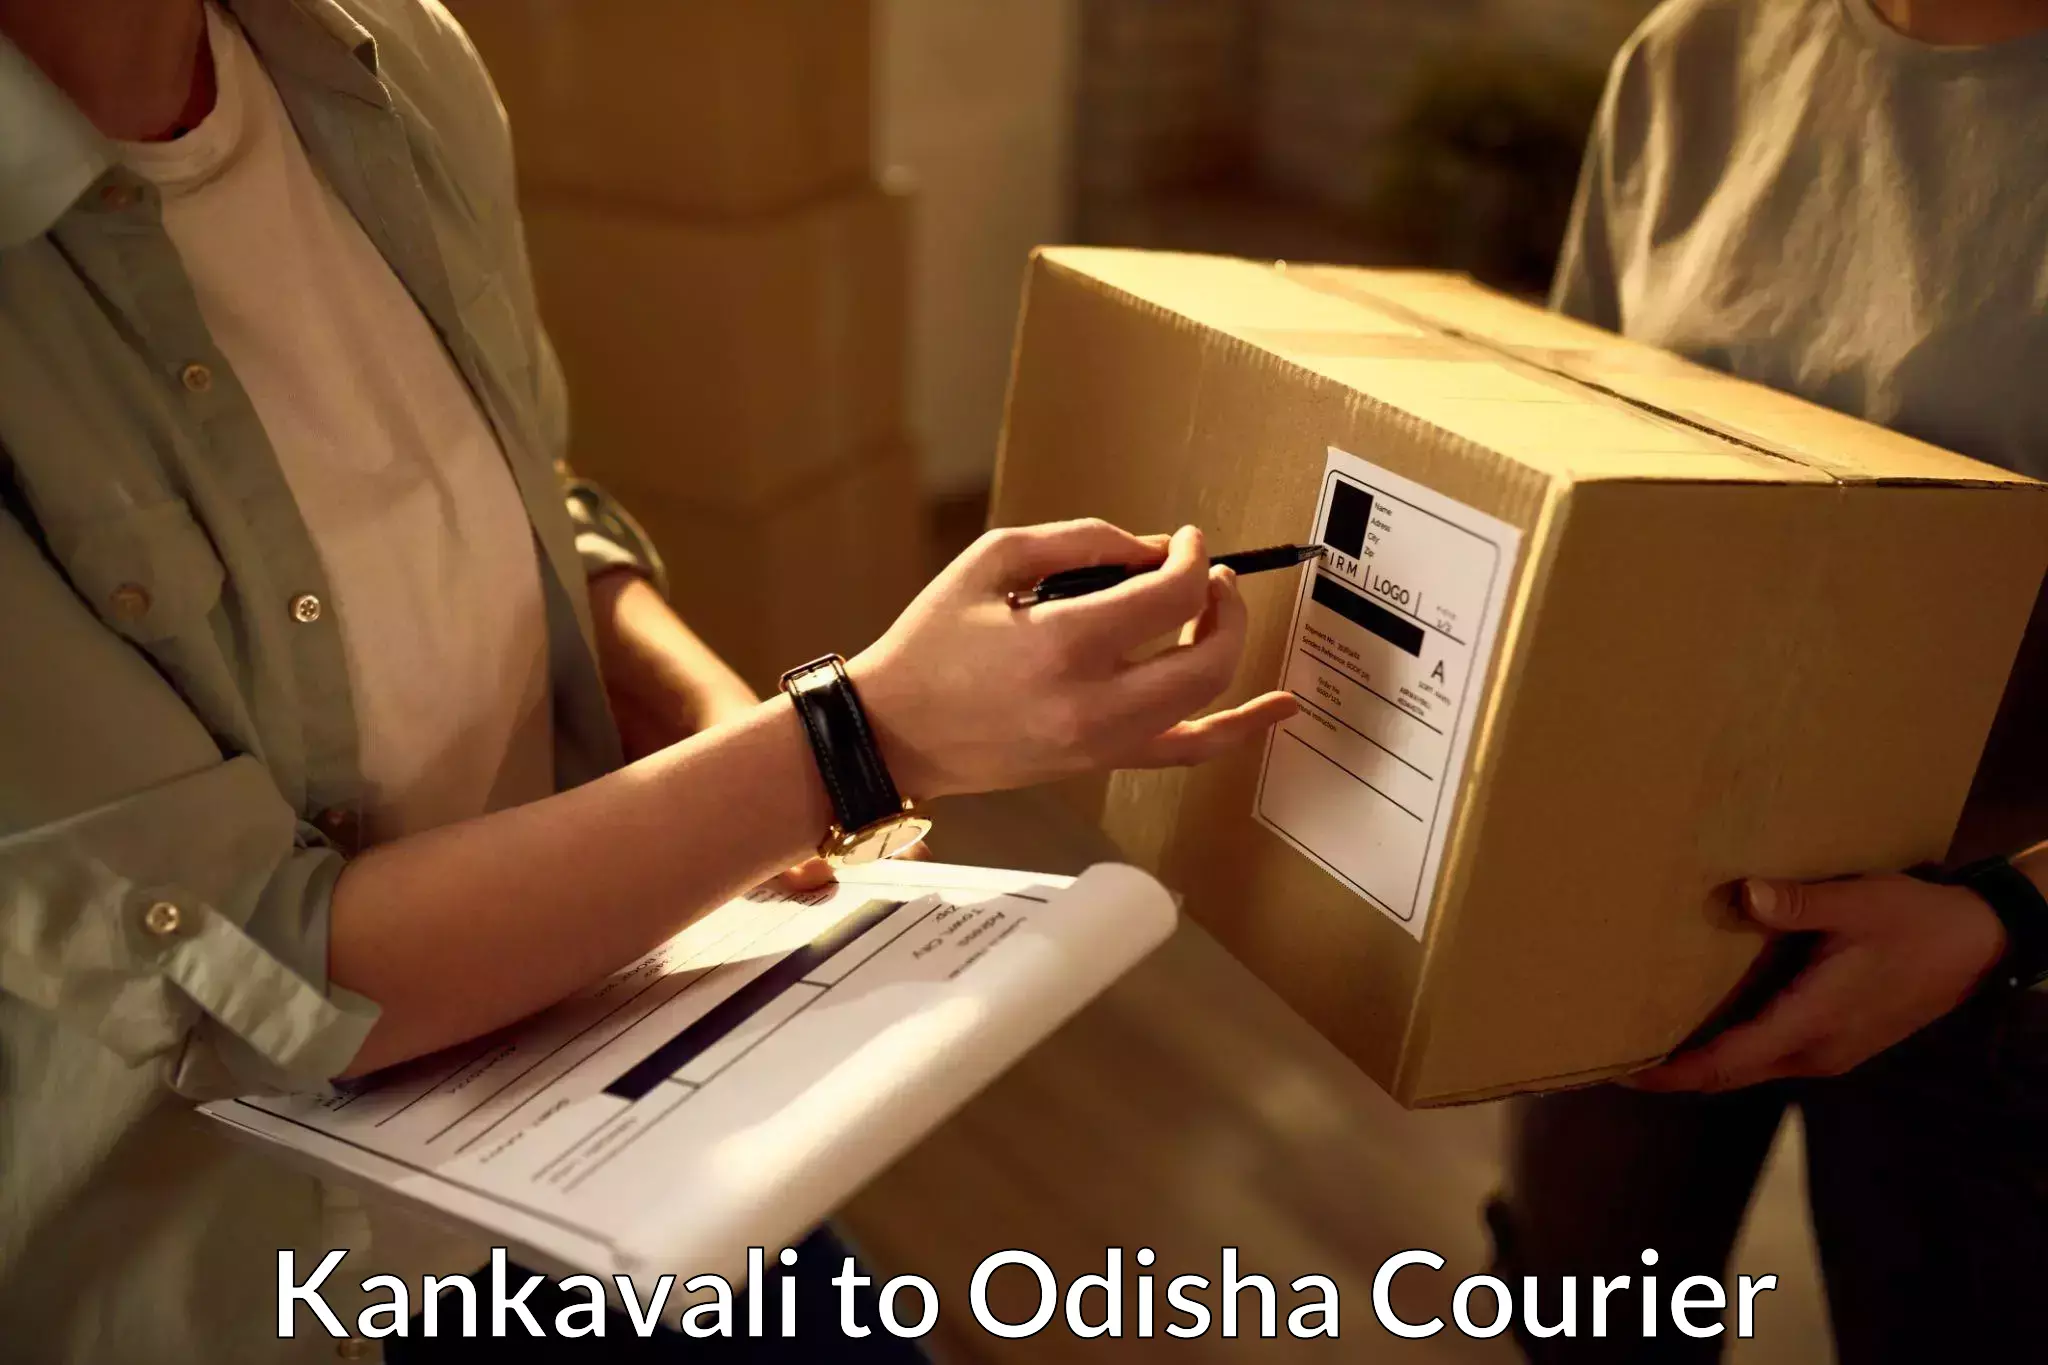 Courier service booking Kankavali to Odisha